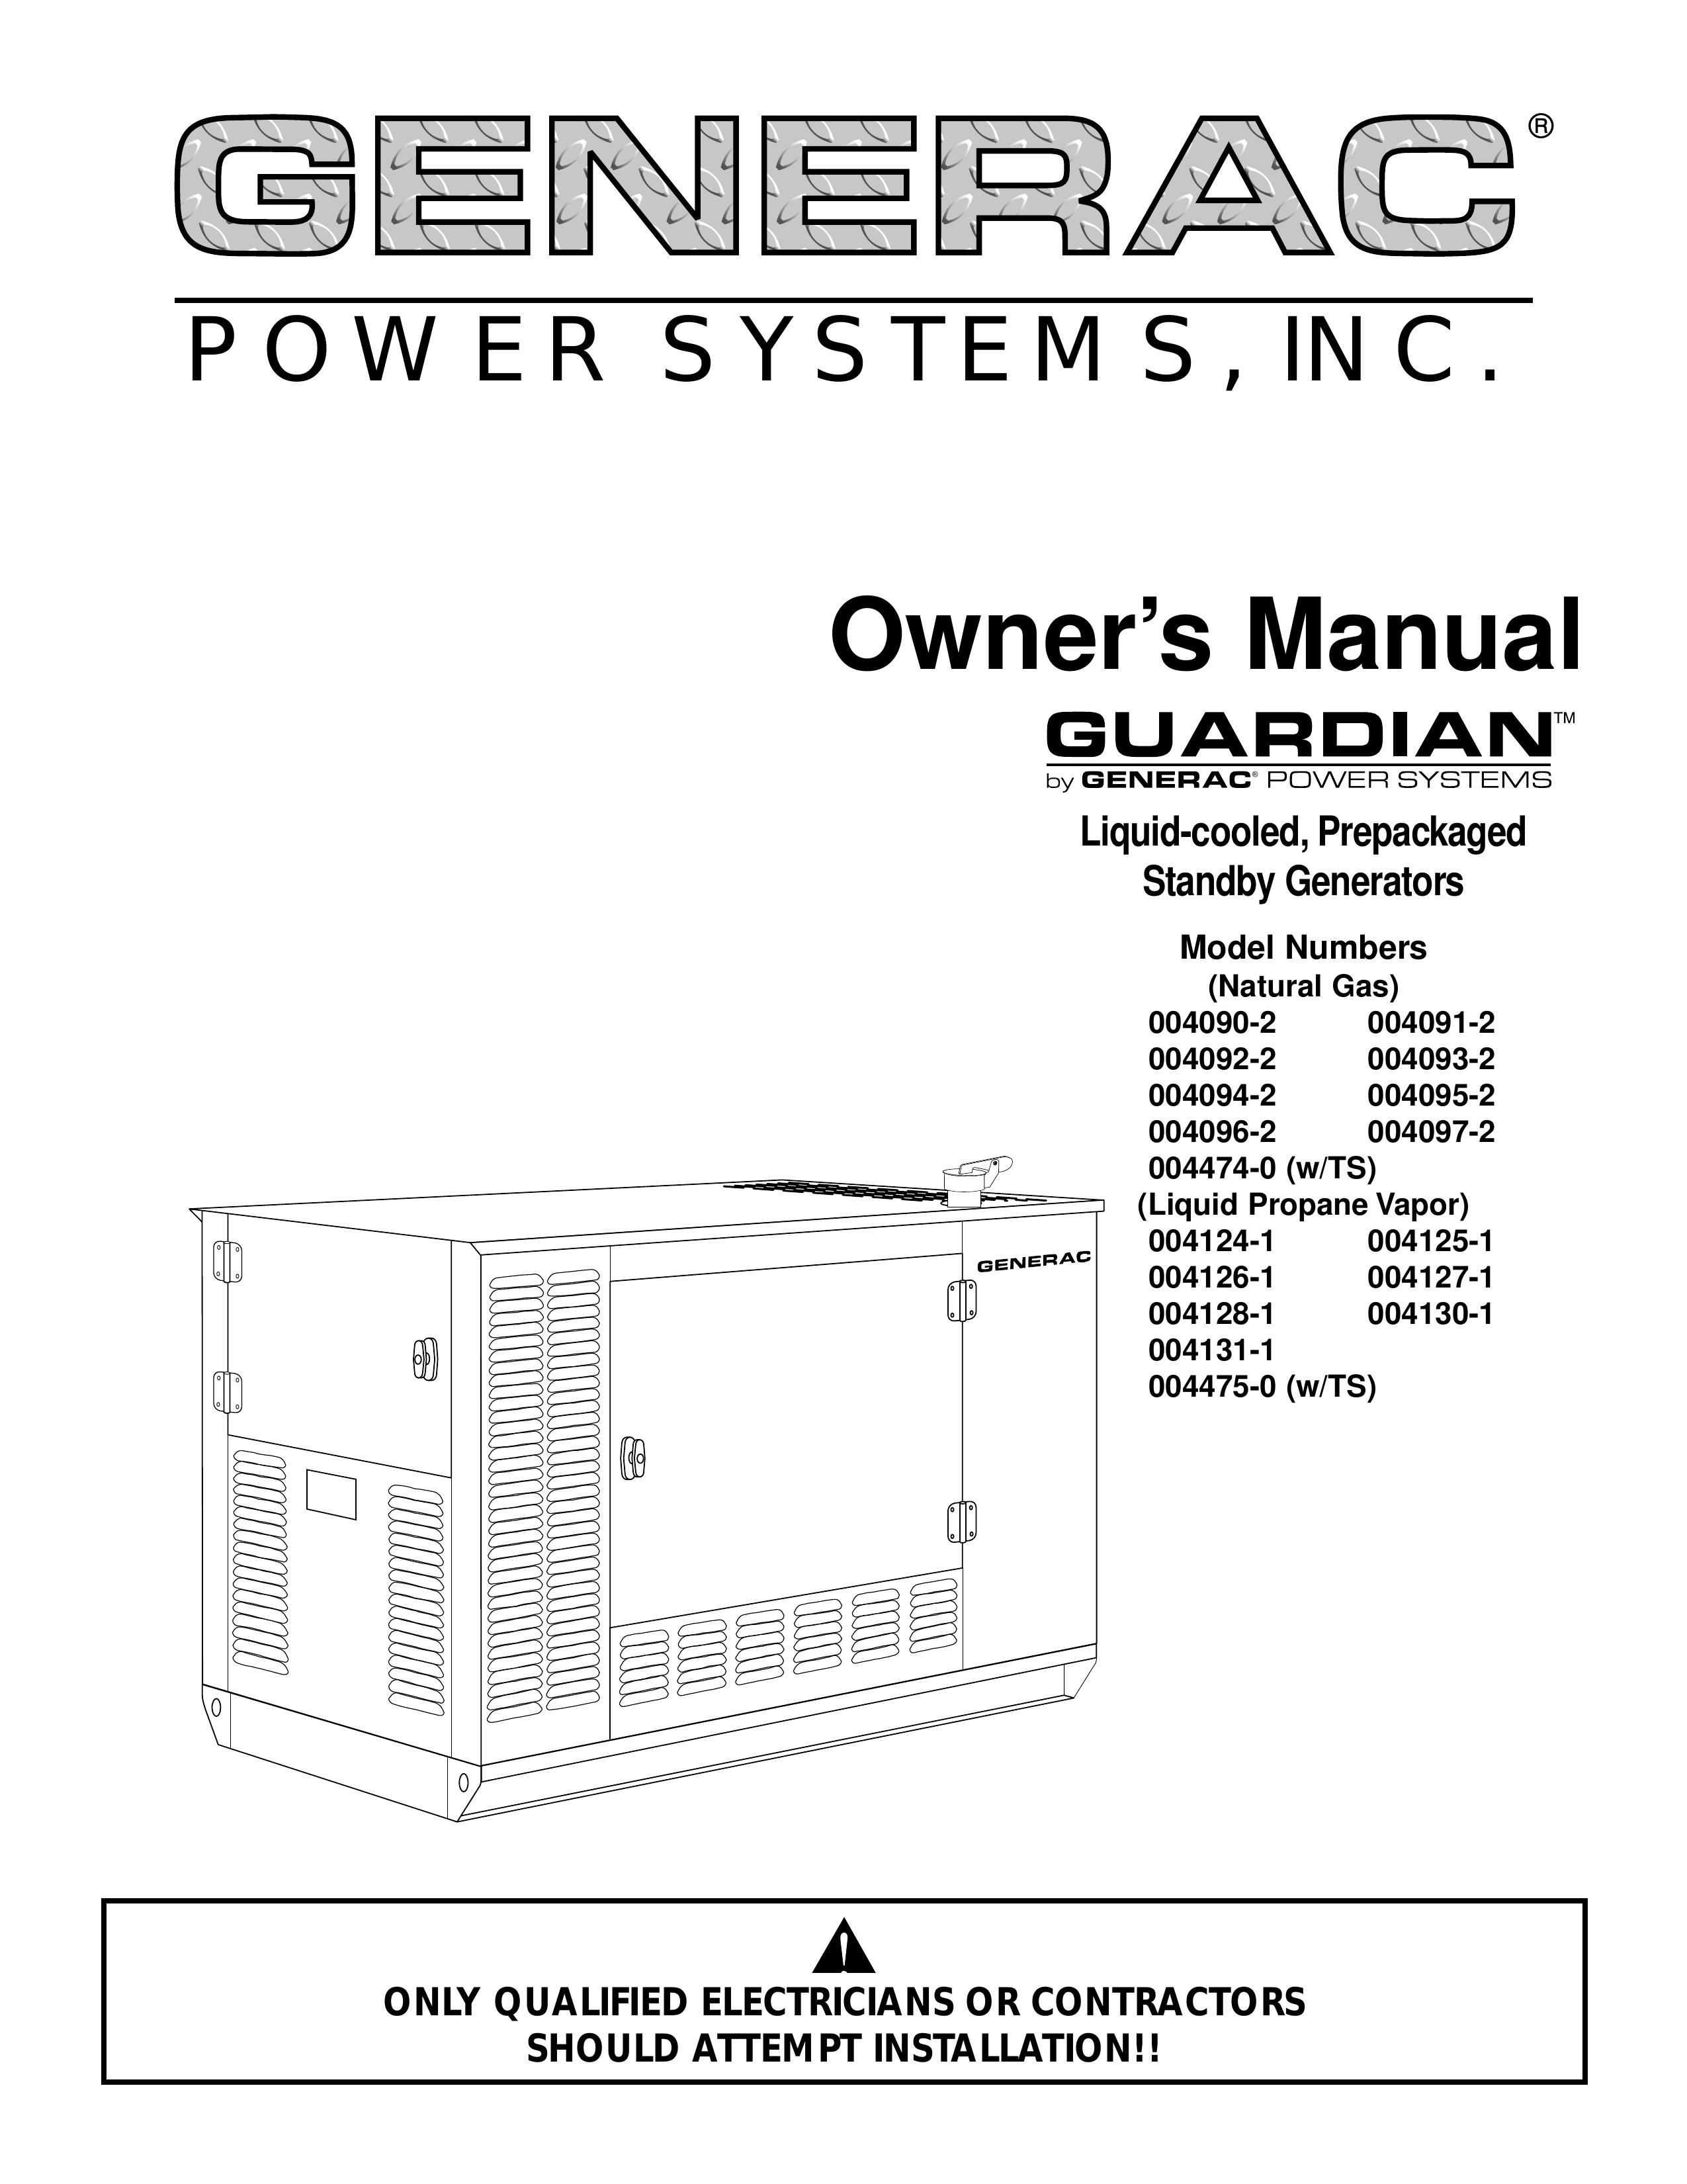 Generac Power Systems 004090-2, 004091-2, 004092-2, 004093-2, 004094-2, 004095-2, 004096-2, 004097-2, 004474-0, 004124-1, 004125-1, 004126-1, 004127-1, 004128-1, 004130-1, 004131-1, 004475-0 Portable Generator User Manual